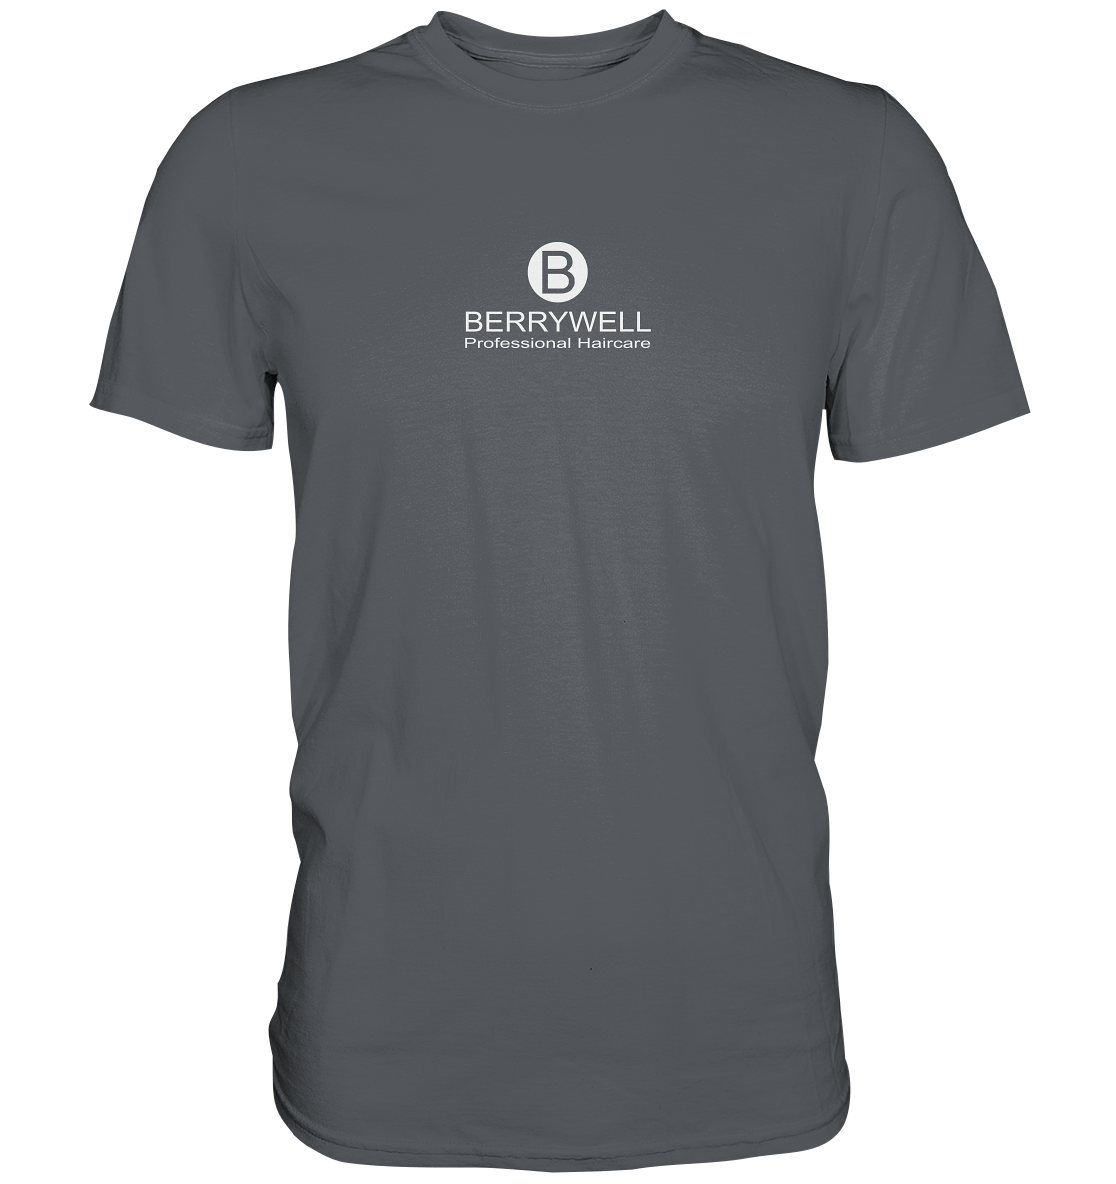 Berrywell Salonshirt new - Unisex Premium Shirt